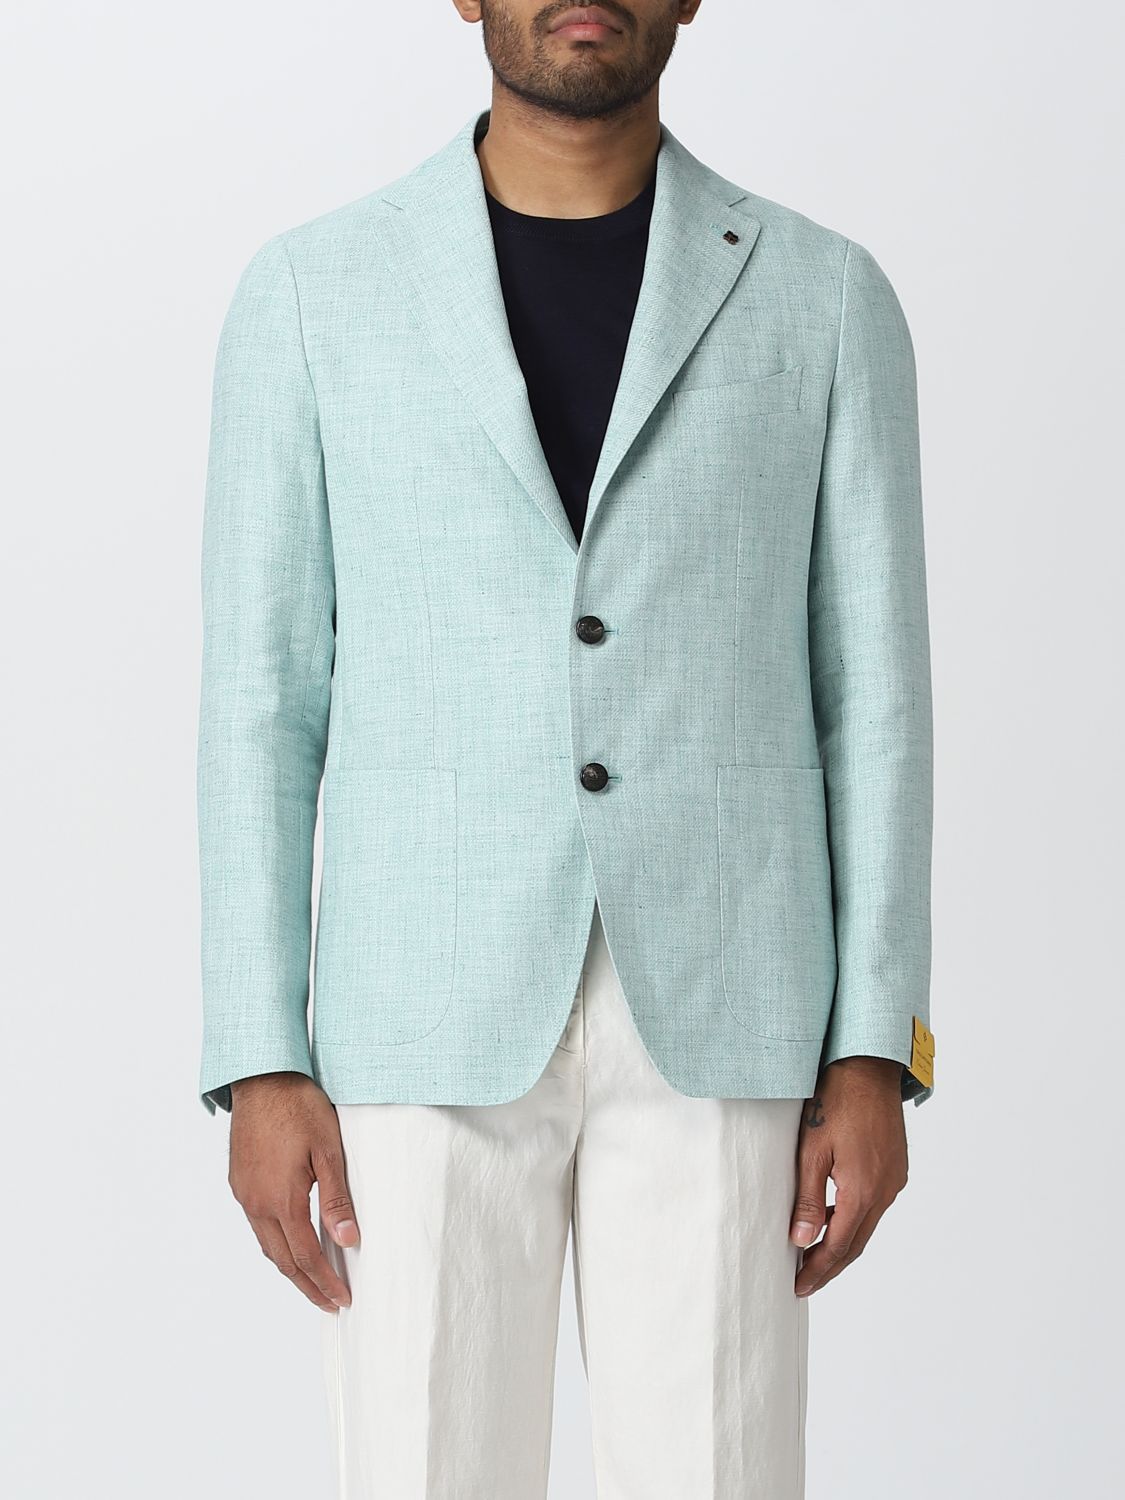 Tagliatore Jacket In Turquoise